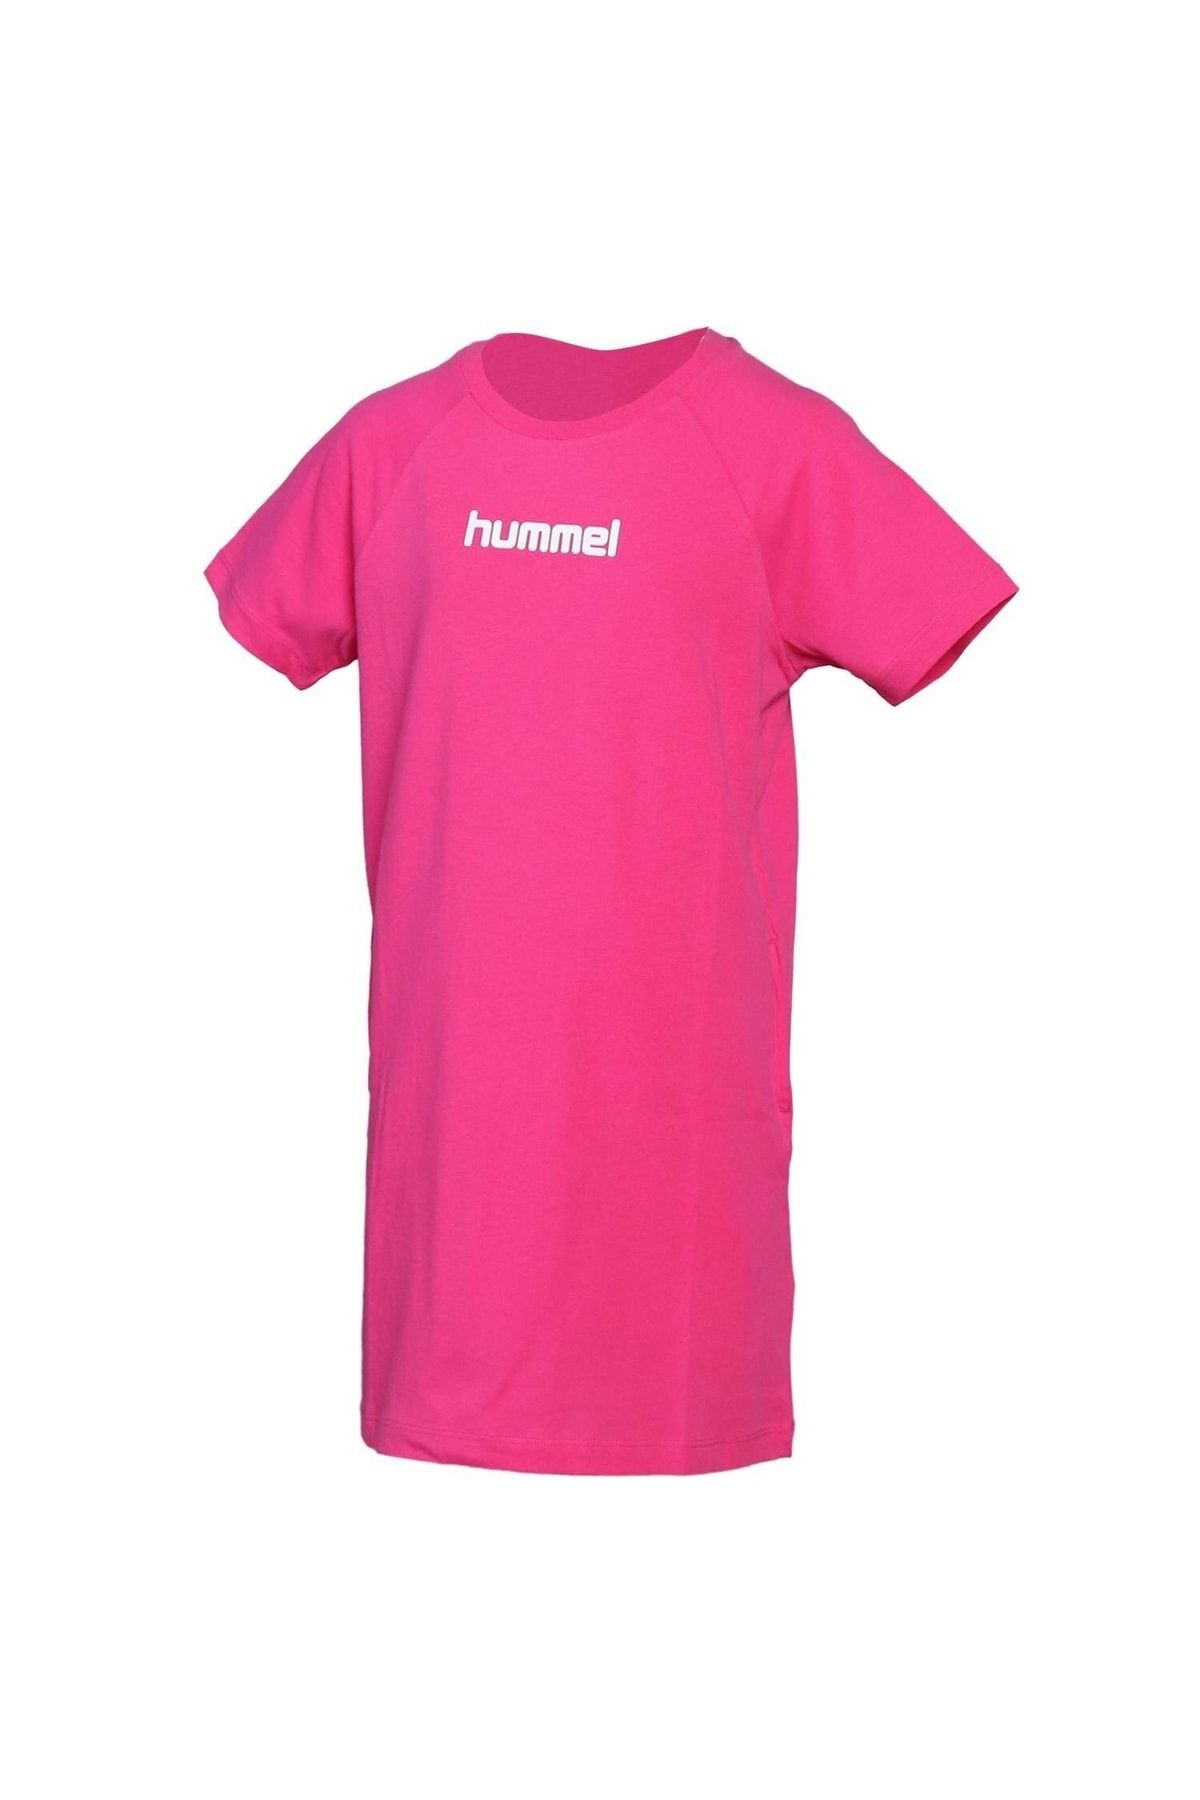 hummel تی شرت لباس مونترسو بچه های یونیسکس